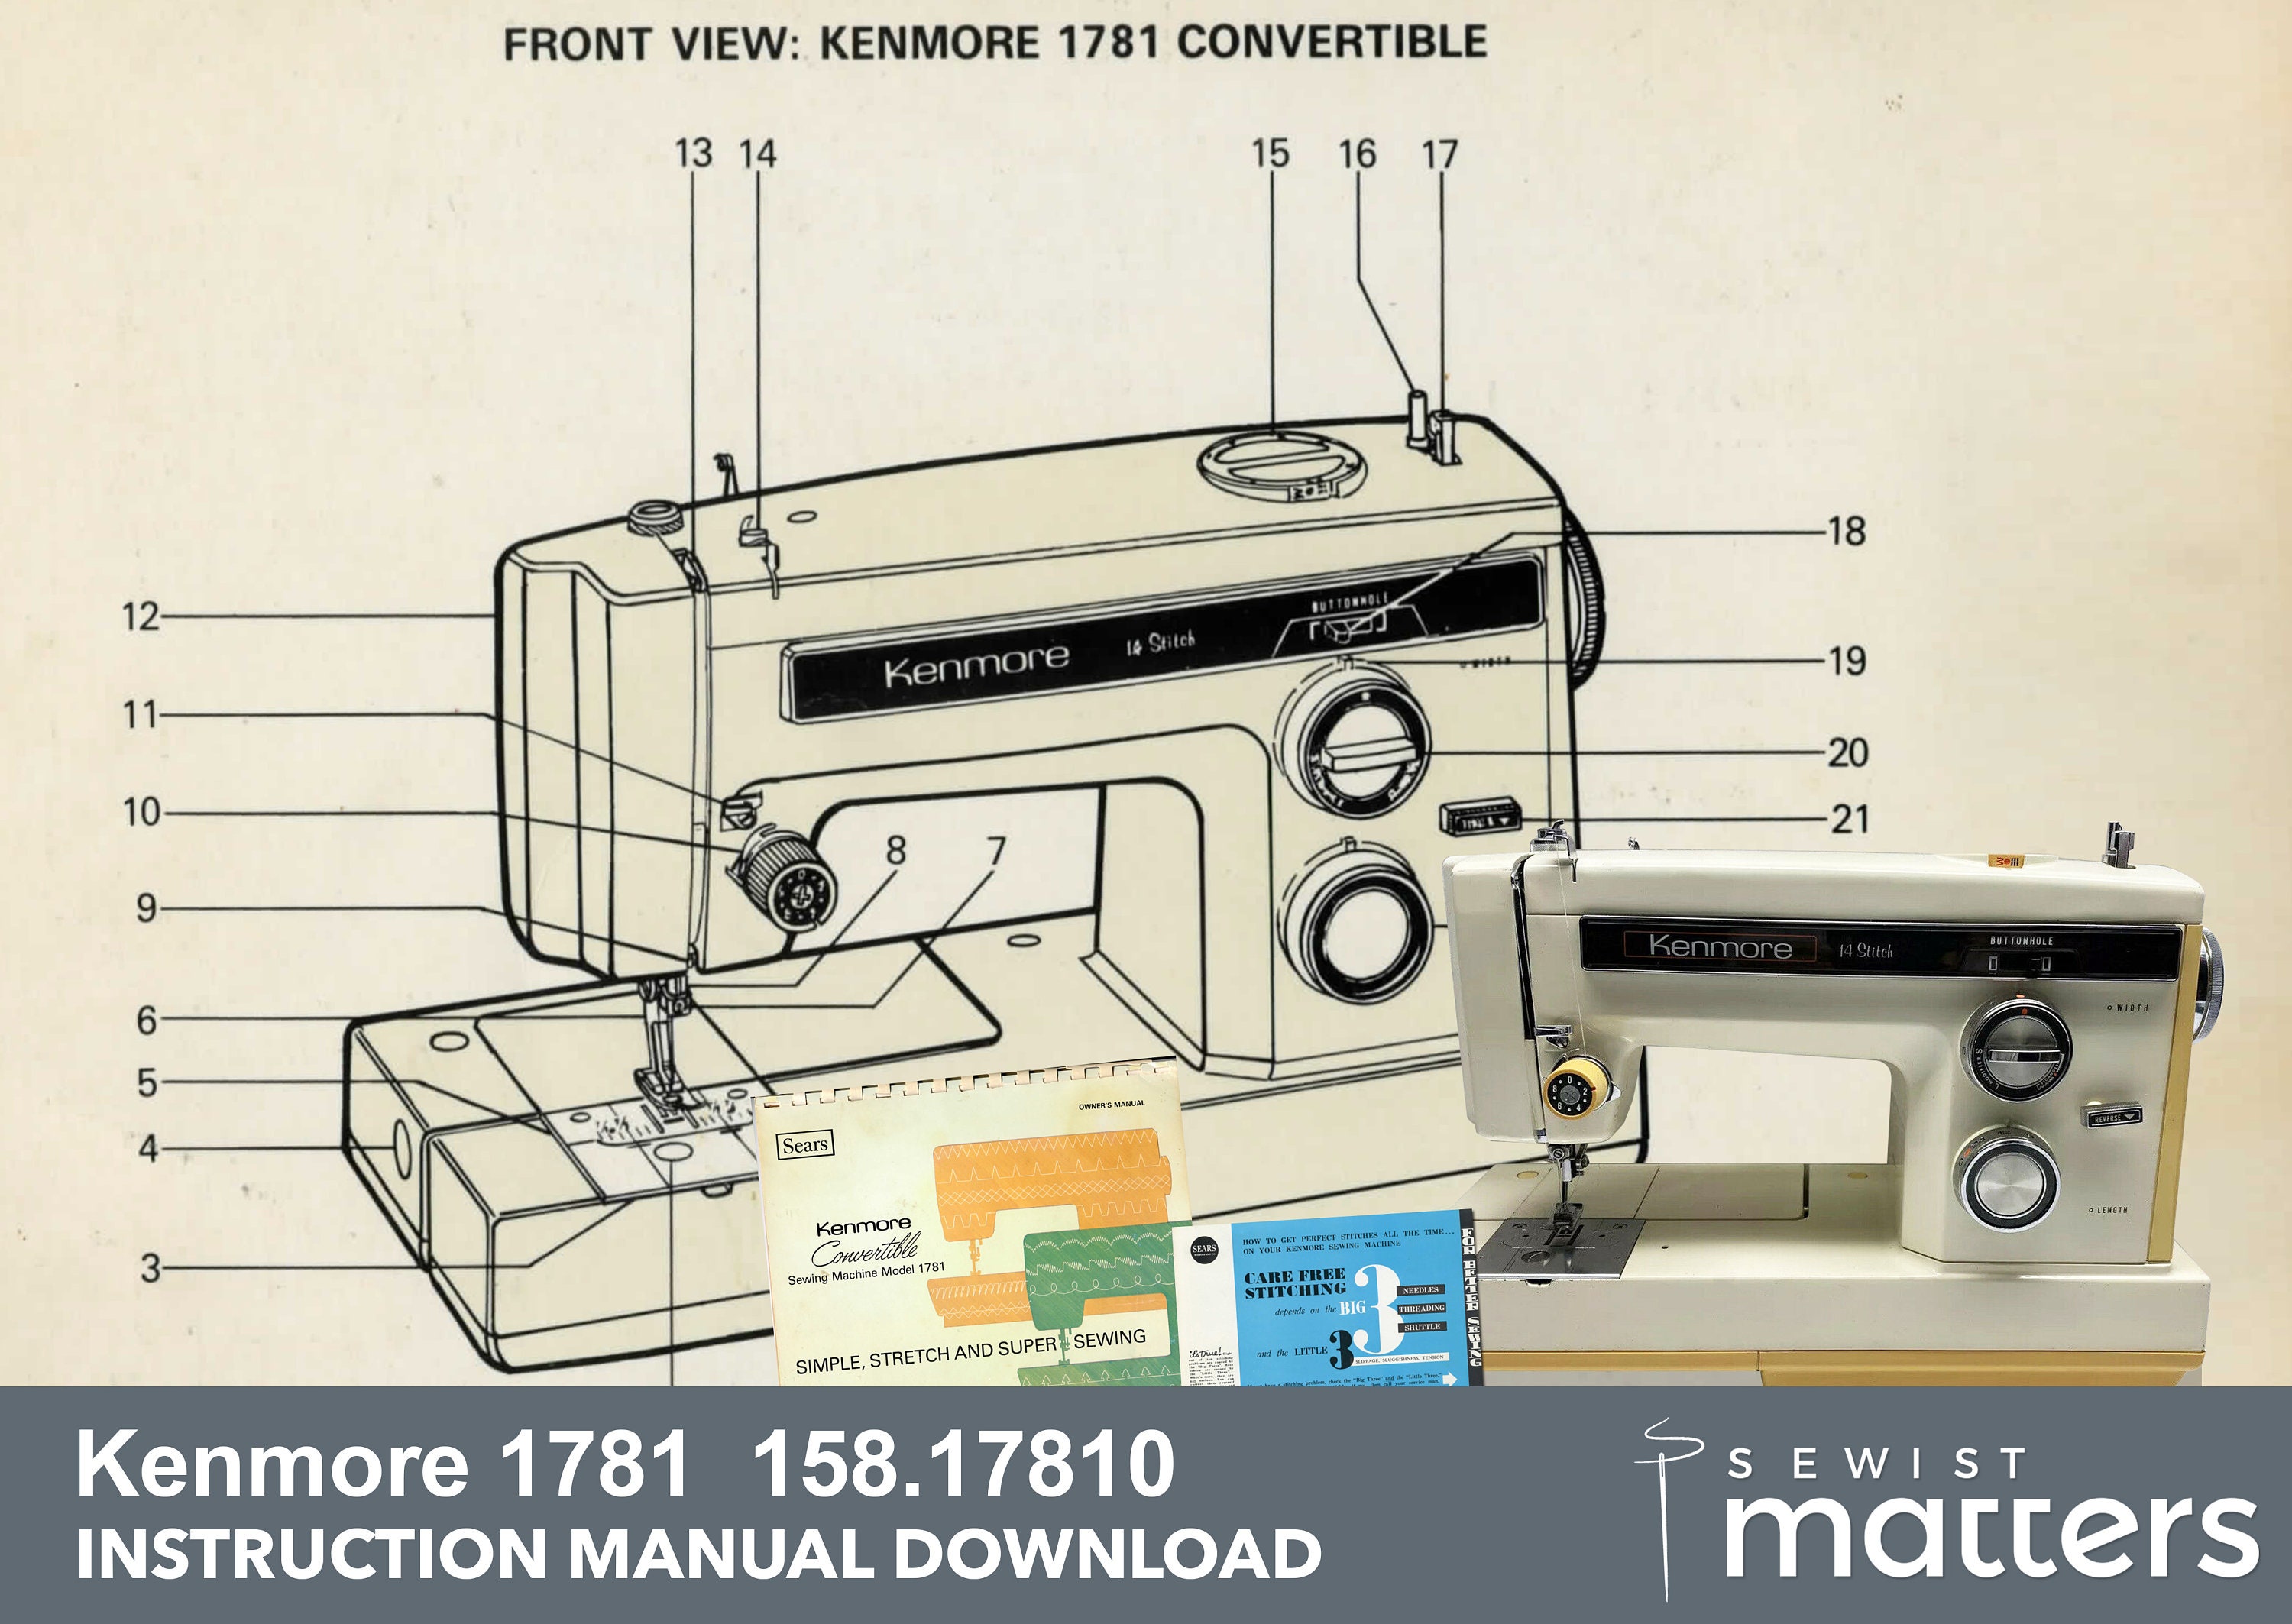 Kenmore 1781 15817810, 15817812 14 stitch Convertible Zigzag Sewing Machine  Instruction Manual PDF Download